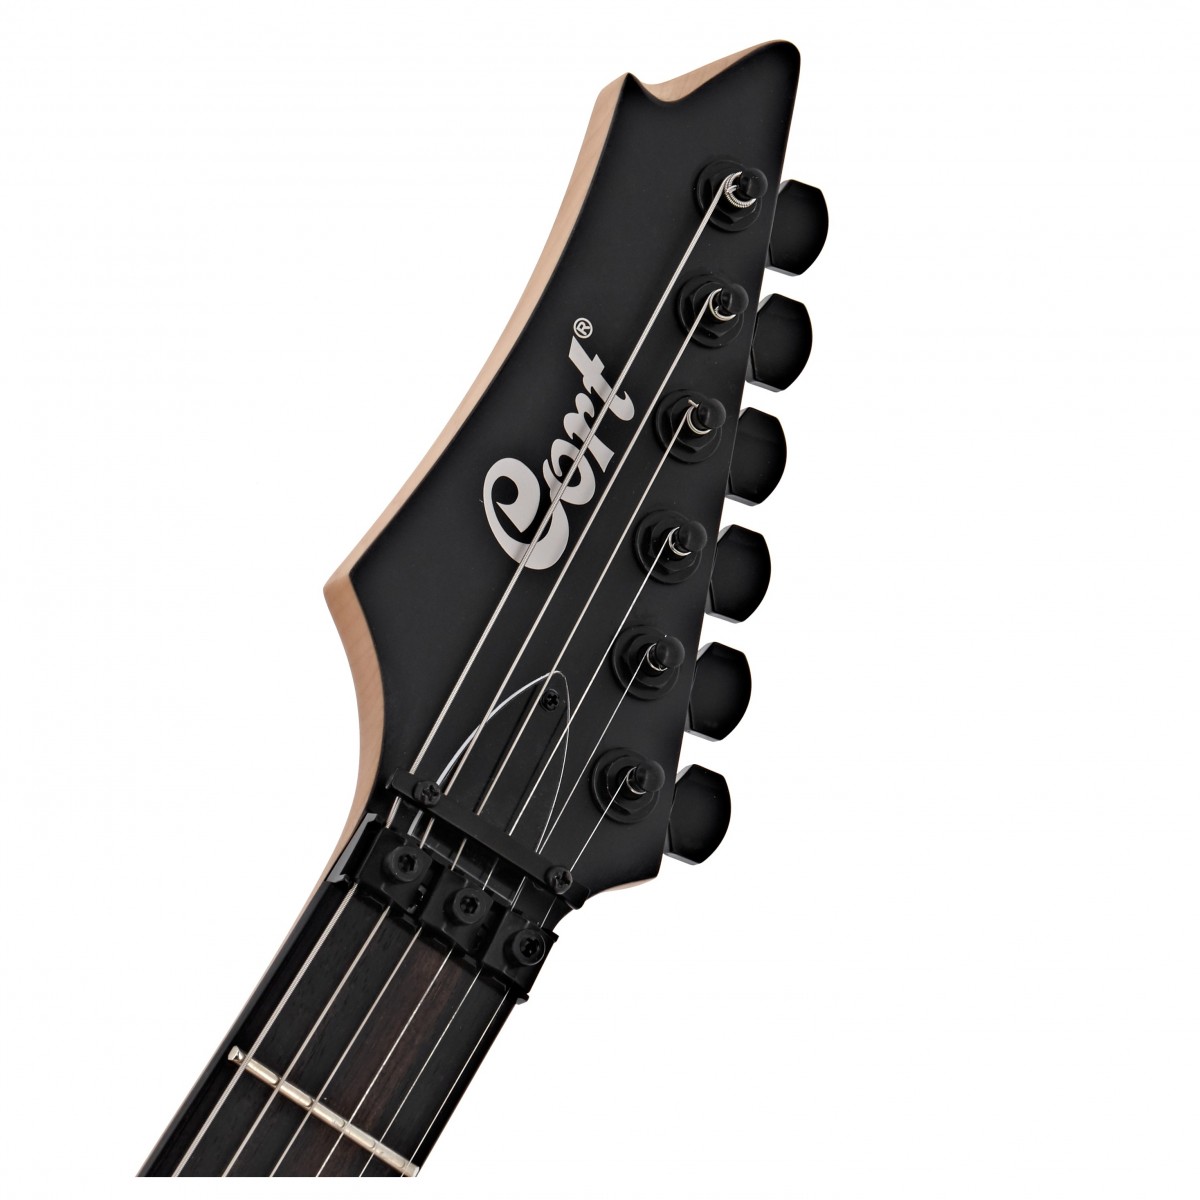 Cort X500 Menace Electric Guitar Online price in India